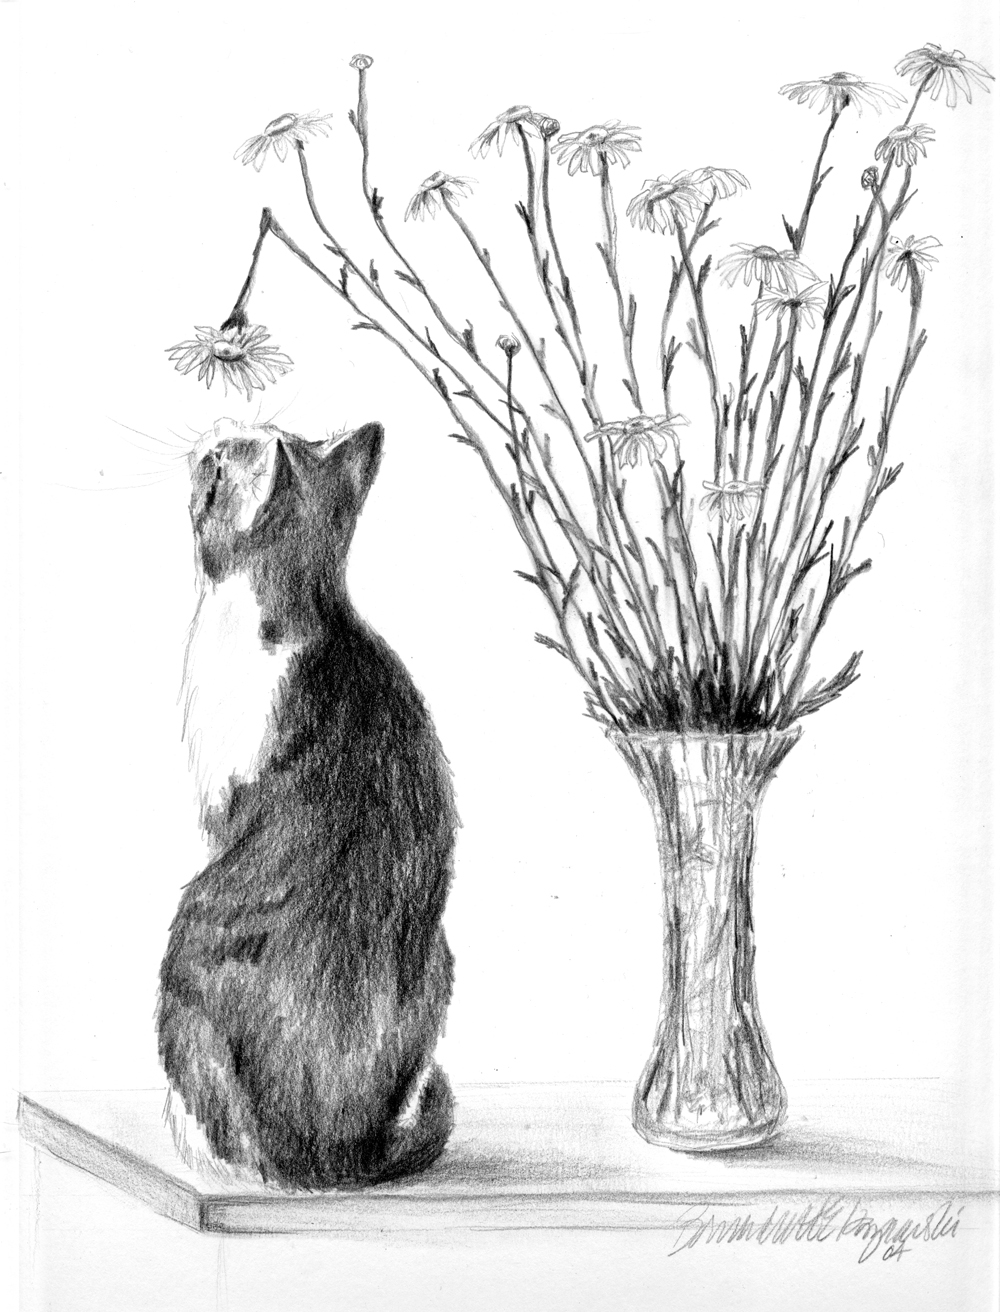 "Conversation With a Daisy", pencil on cream cotton paper, 9" x 12", 2004 © B.E. Kazmarski